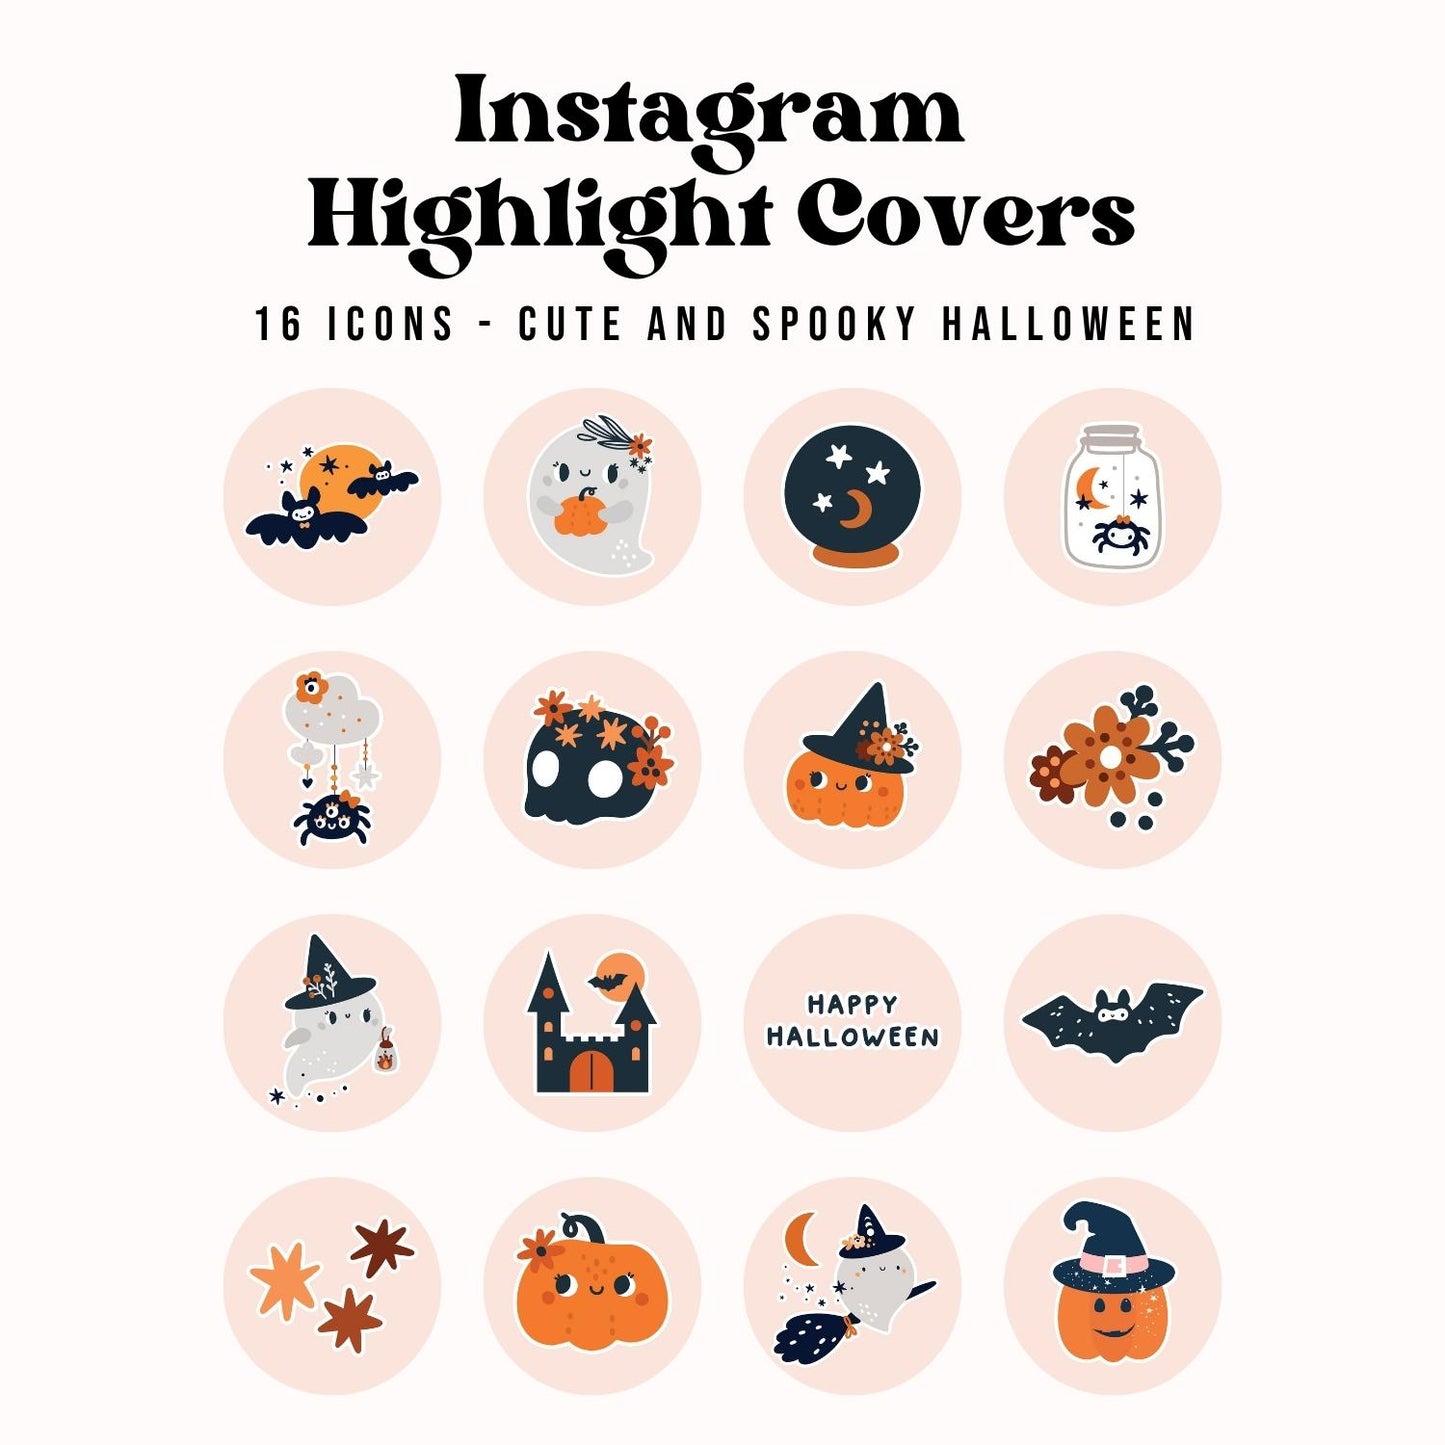 Cute halloween Instagram story highlights